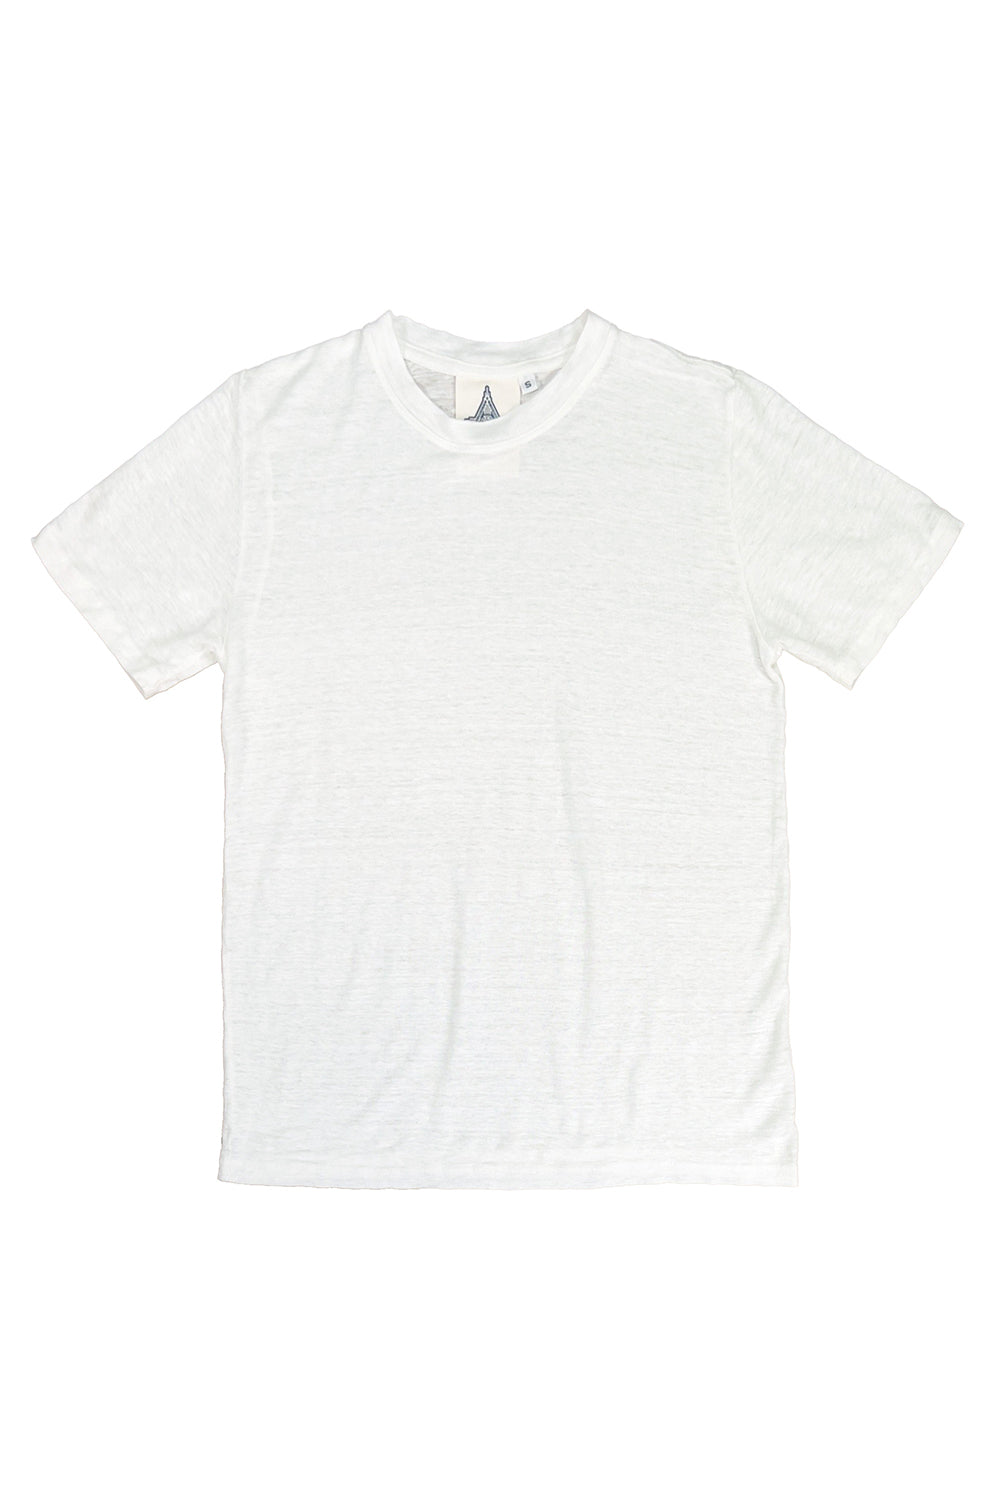 Mana 7 - 100% Hemp Tee | Jungmaven Hemp Clothing & Accessories / Color: Washed White